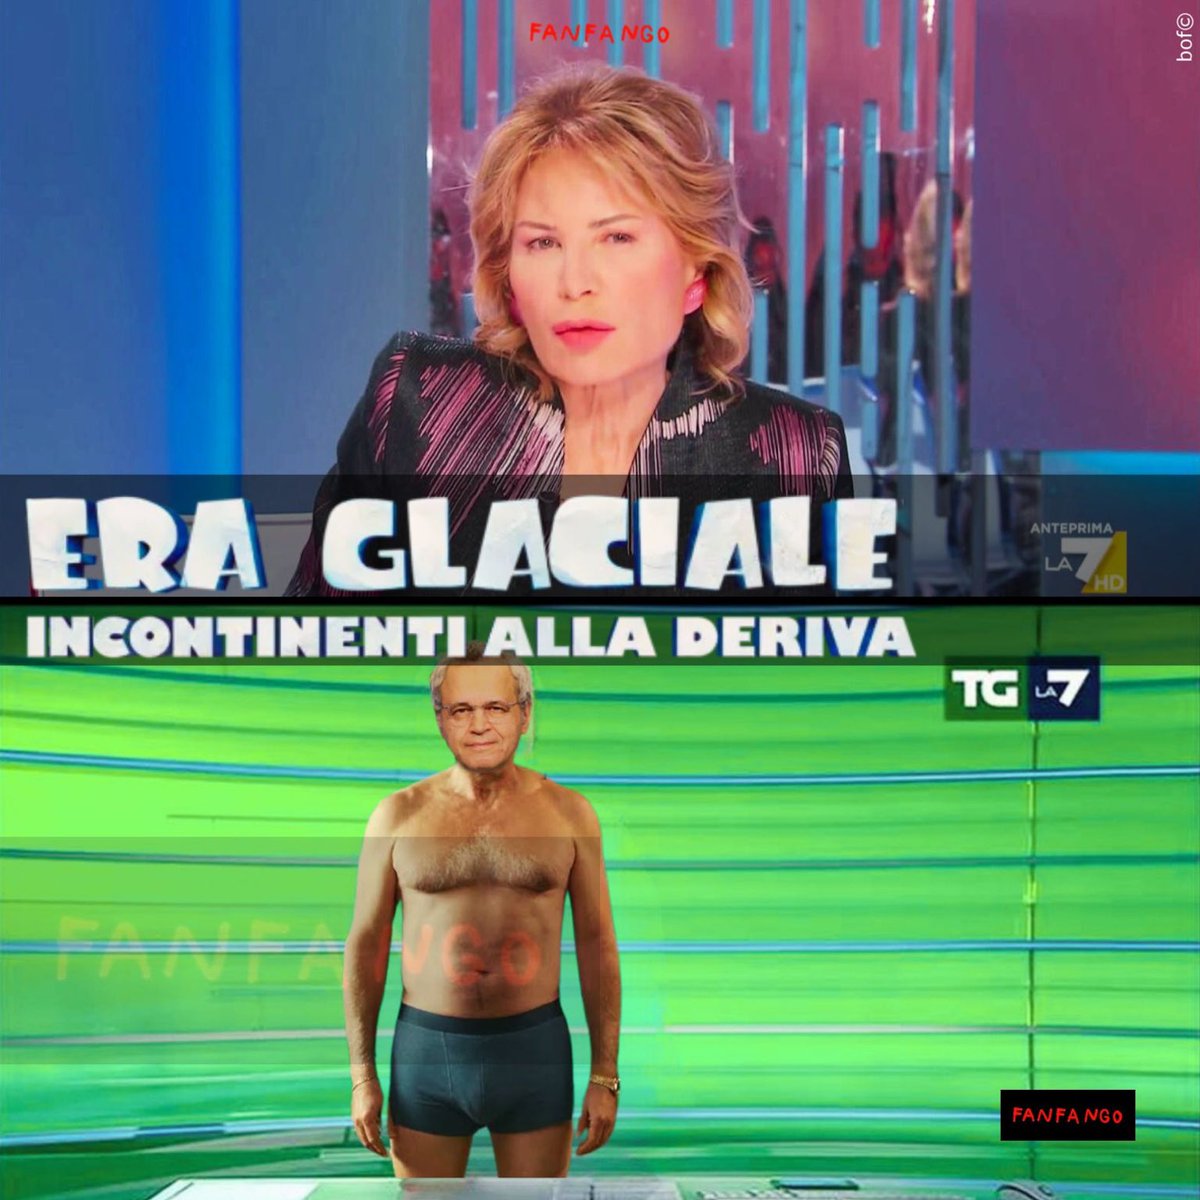 #lilligruber #ottoemezzo #la7 #tgla7 #enricomentana #maratonamentana #telegiornale #incontinenza #fanfango #news #satira #satirapolitica #parodia #meme #memeita #memeitalia #memesita #italia #italiani #madeinitaly #giornalisti